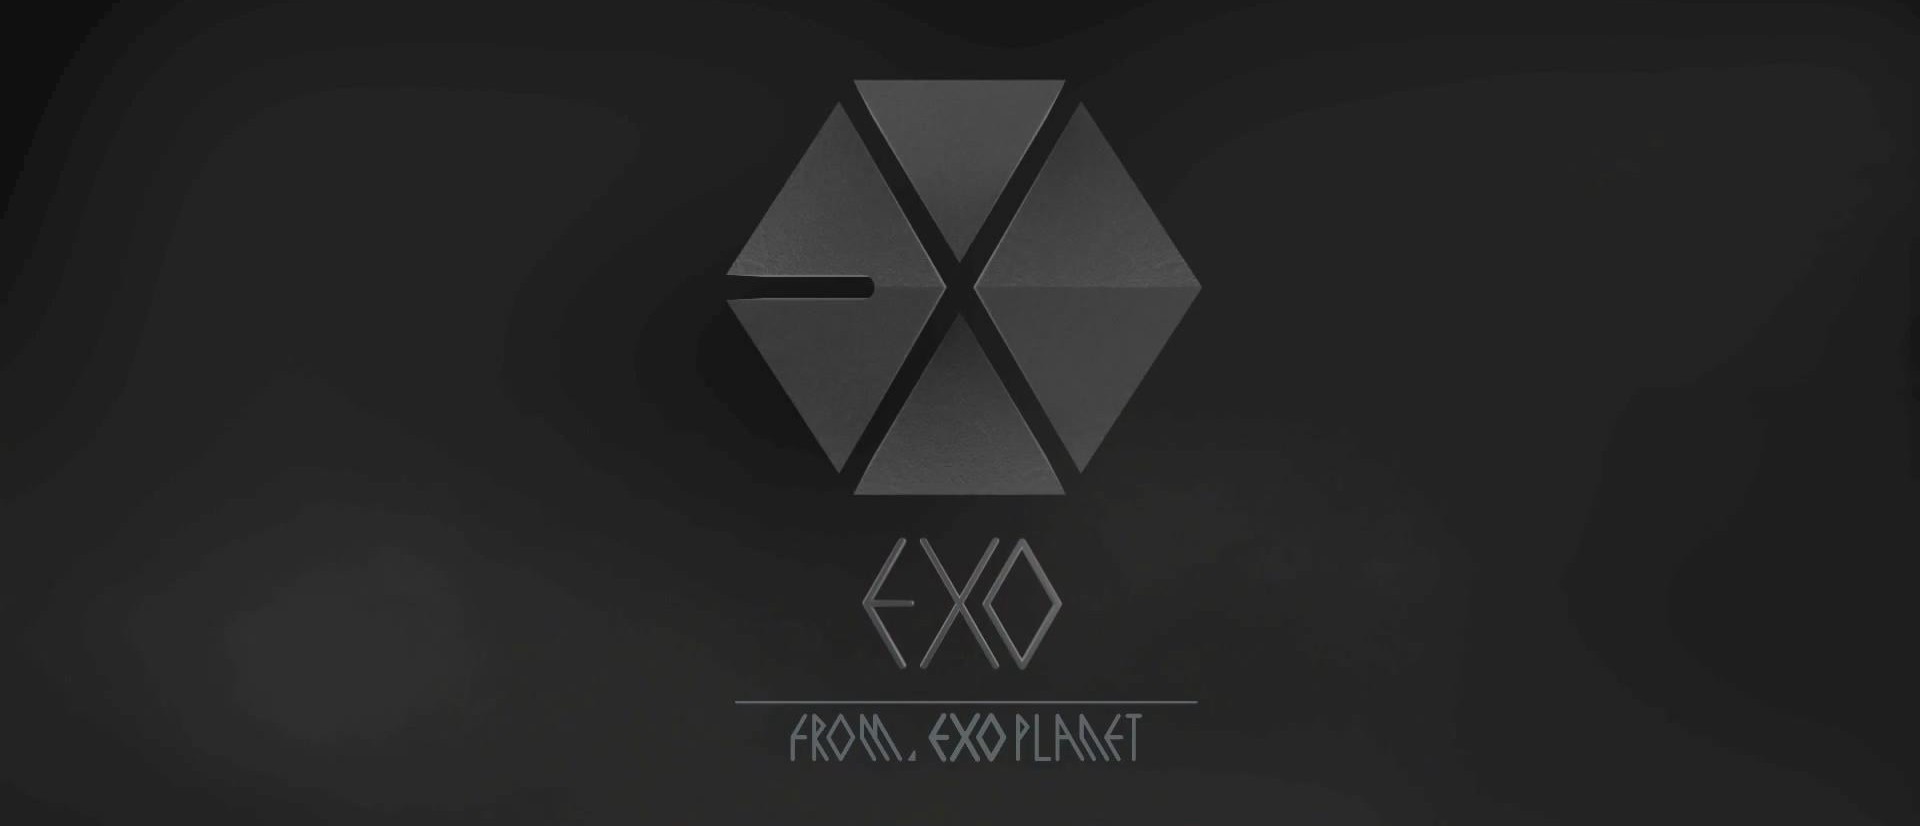 Exo Logo Wallpaper (77+ images)